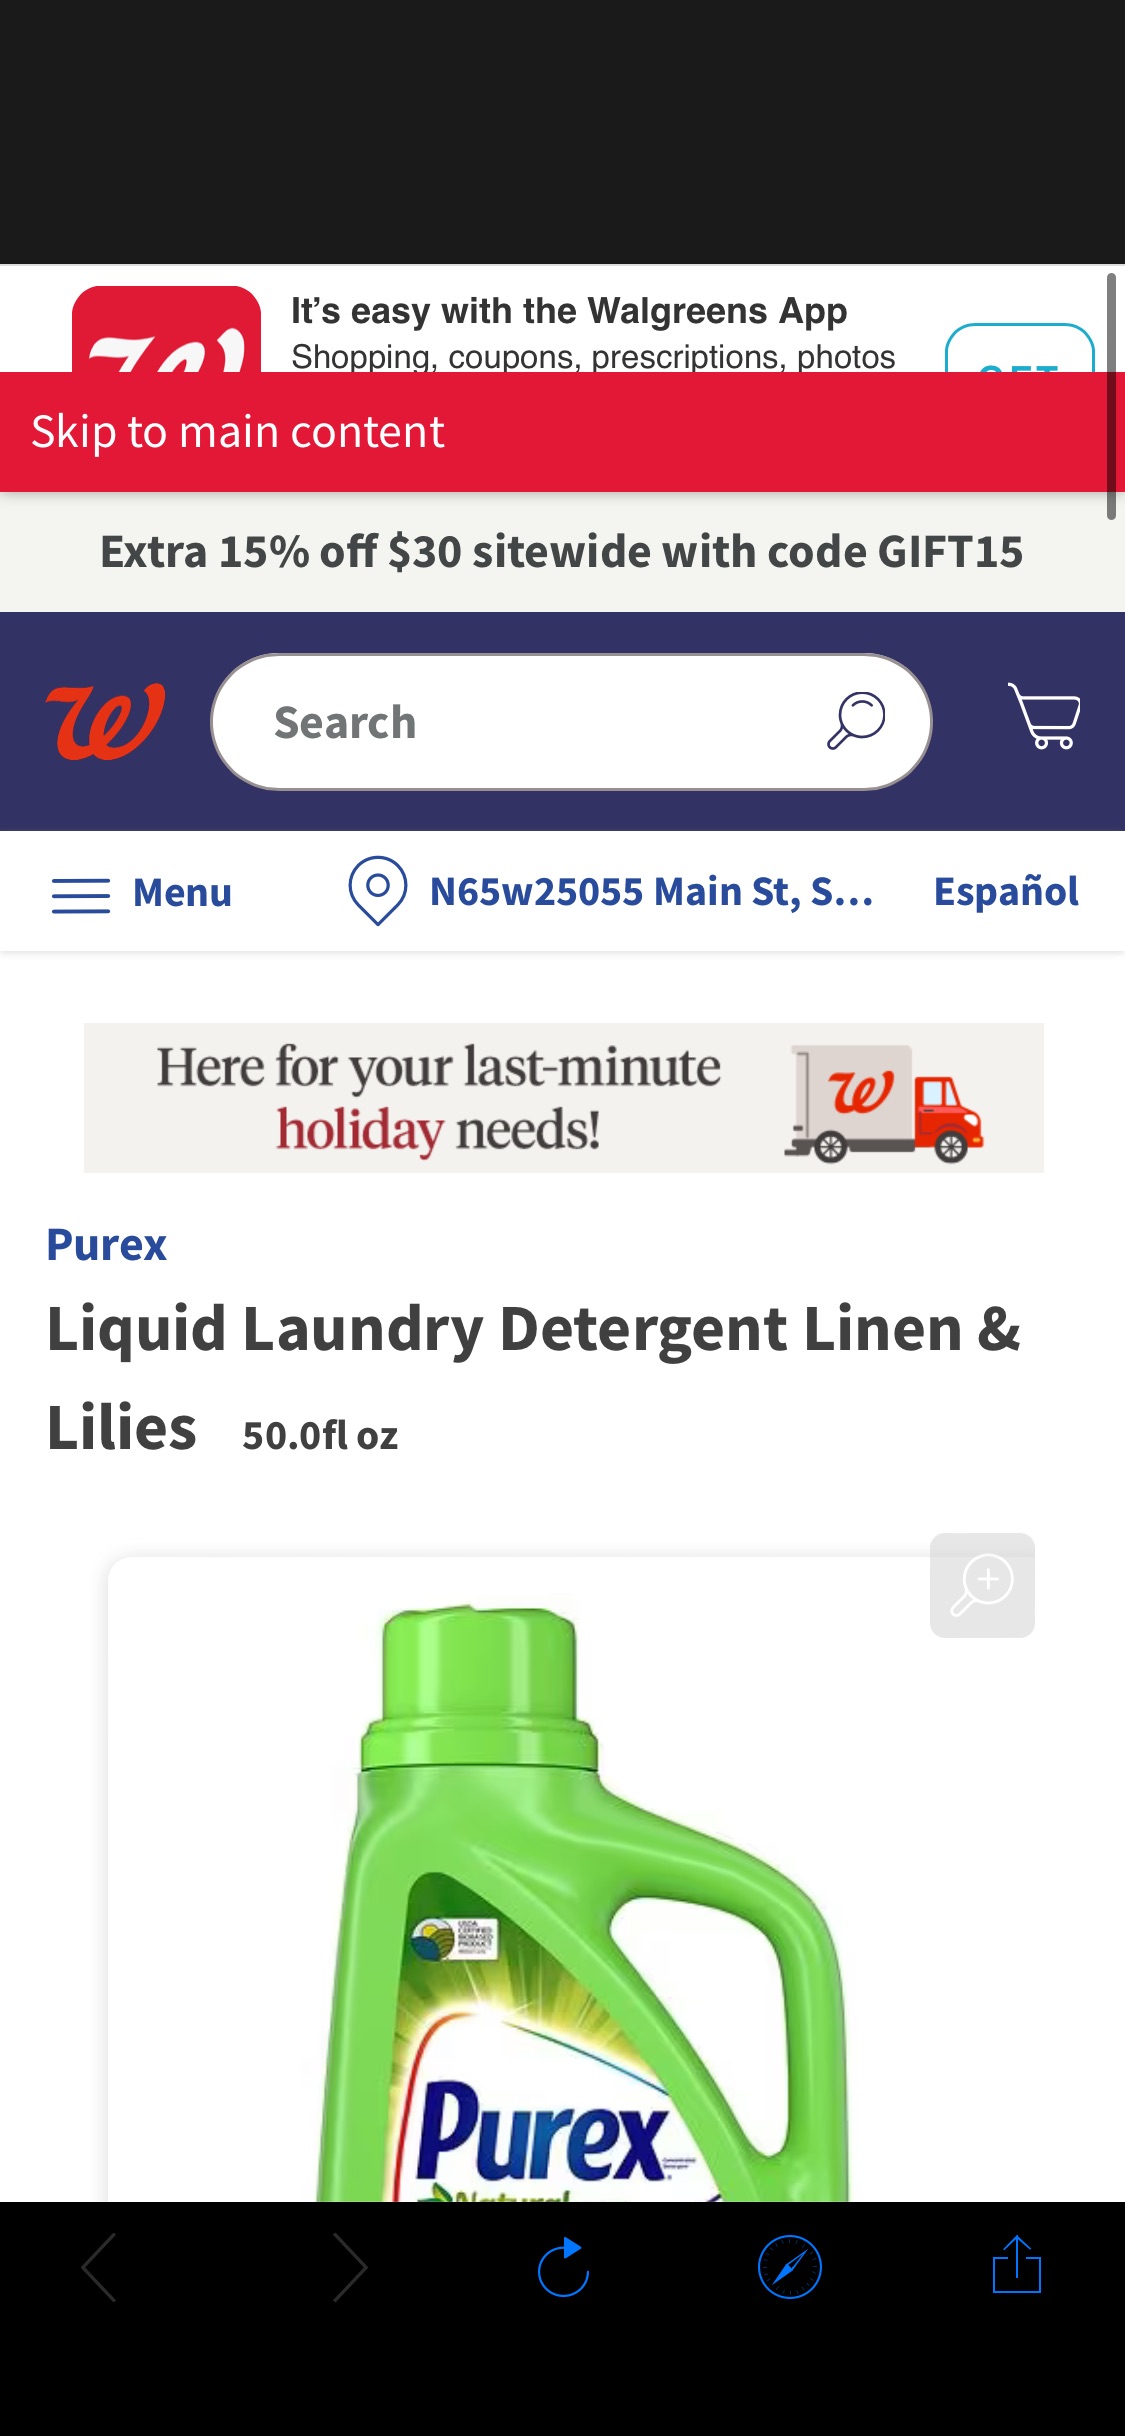 Purex Liquid Laundry Detergent Linen & Lilies | Walgreens